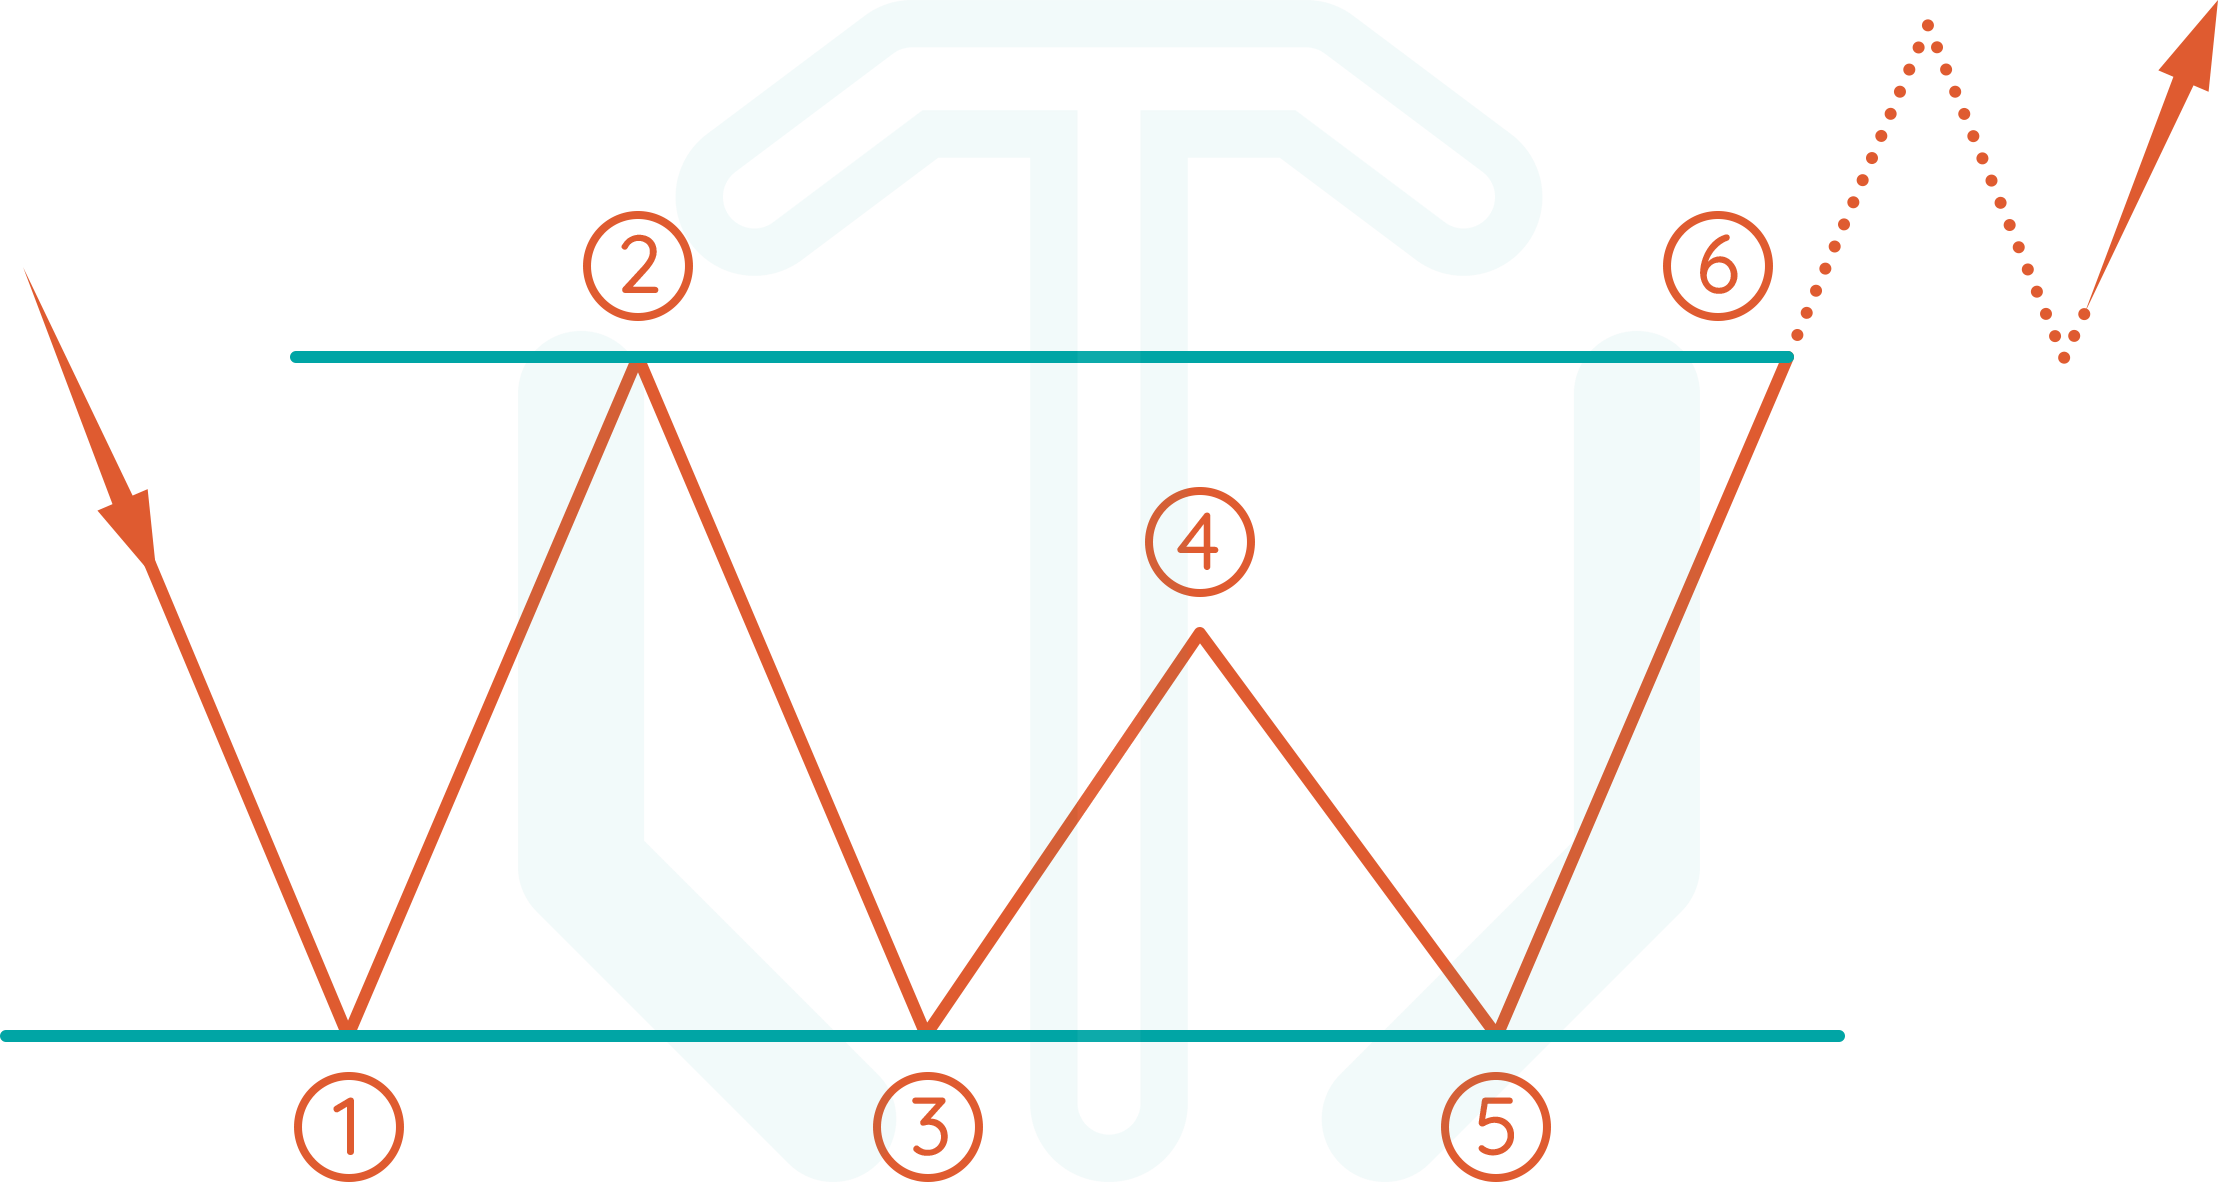 Triple bottom chart pattern illustration